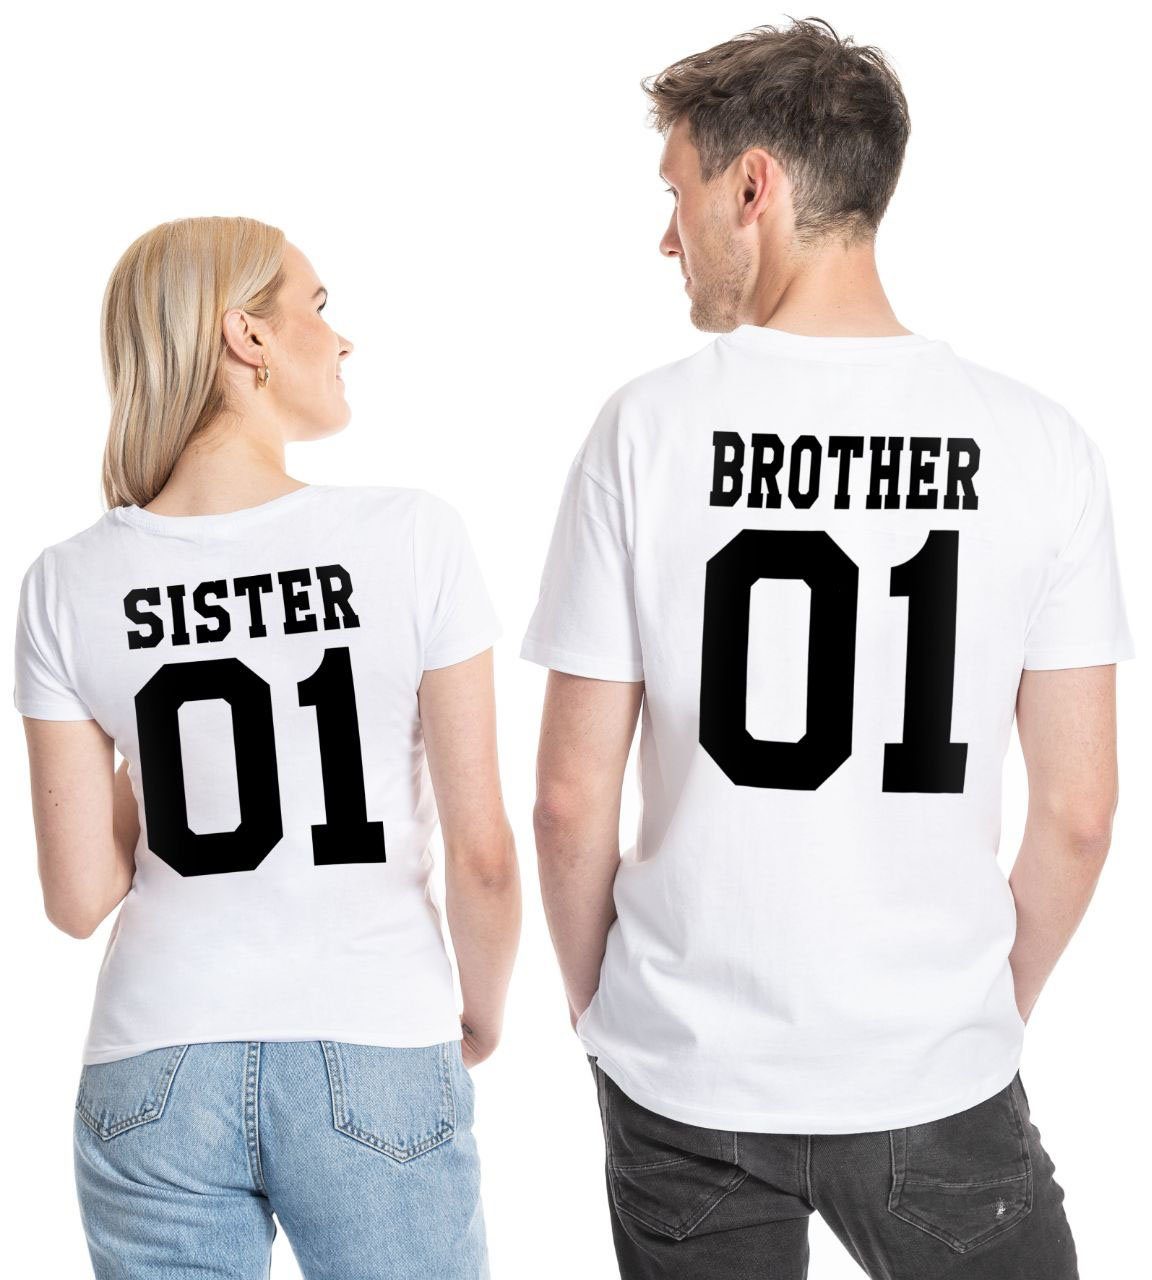 Couples Shop T-Shirt Brother & Sister T-Shirt mit modischem Print